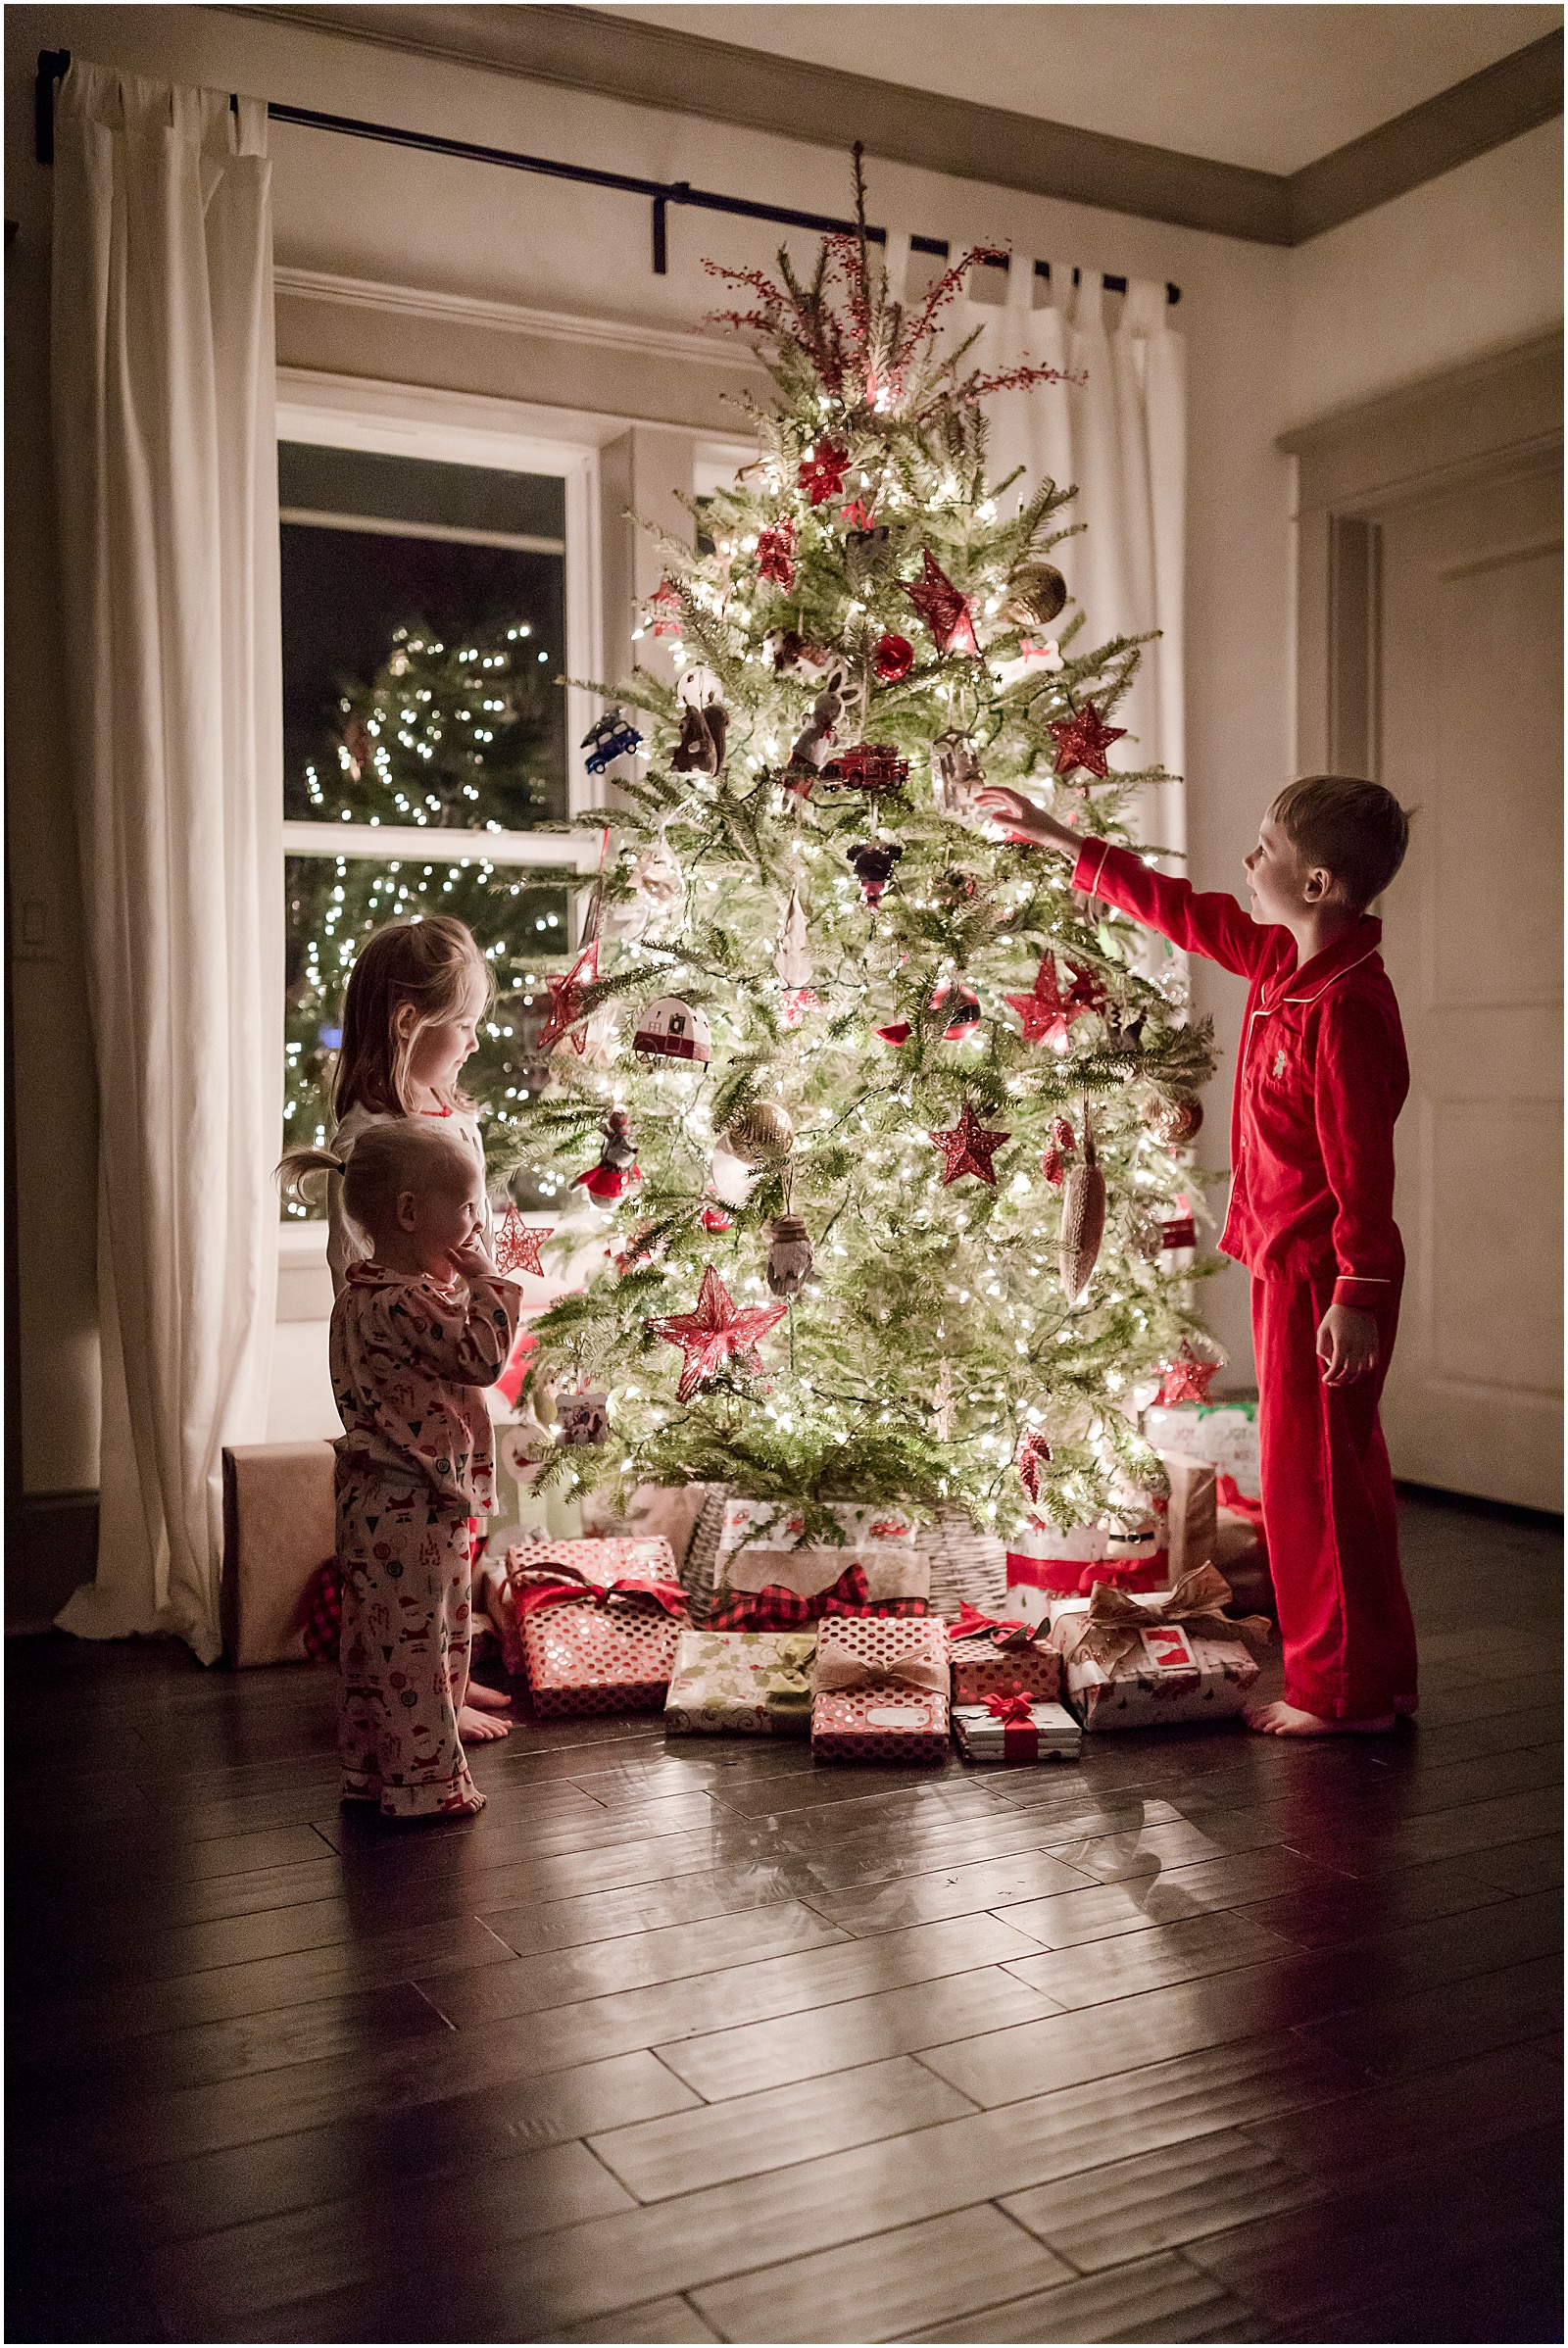 photos by the Christmas tree, children around the christmas tree